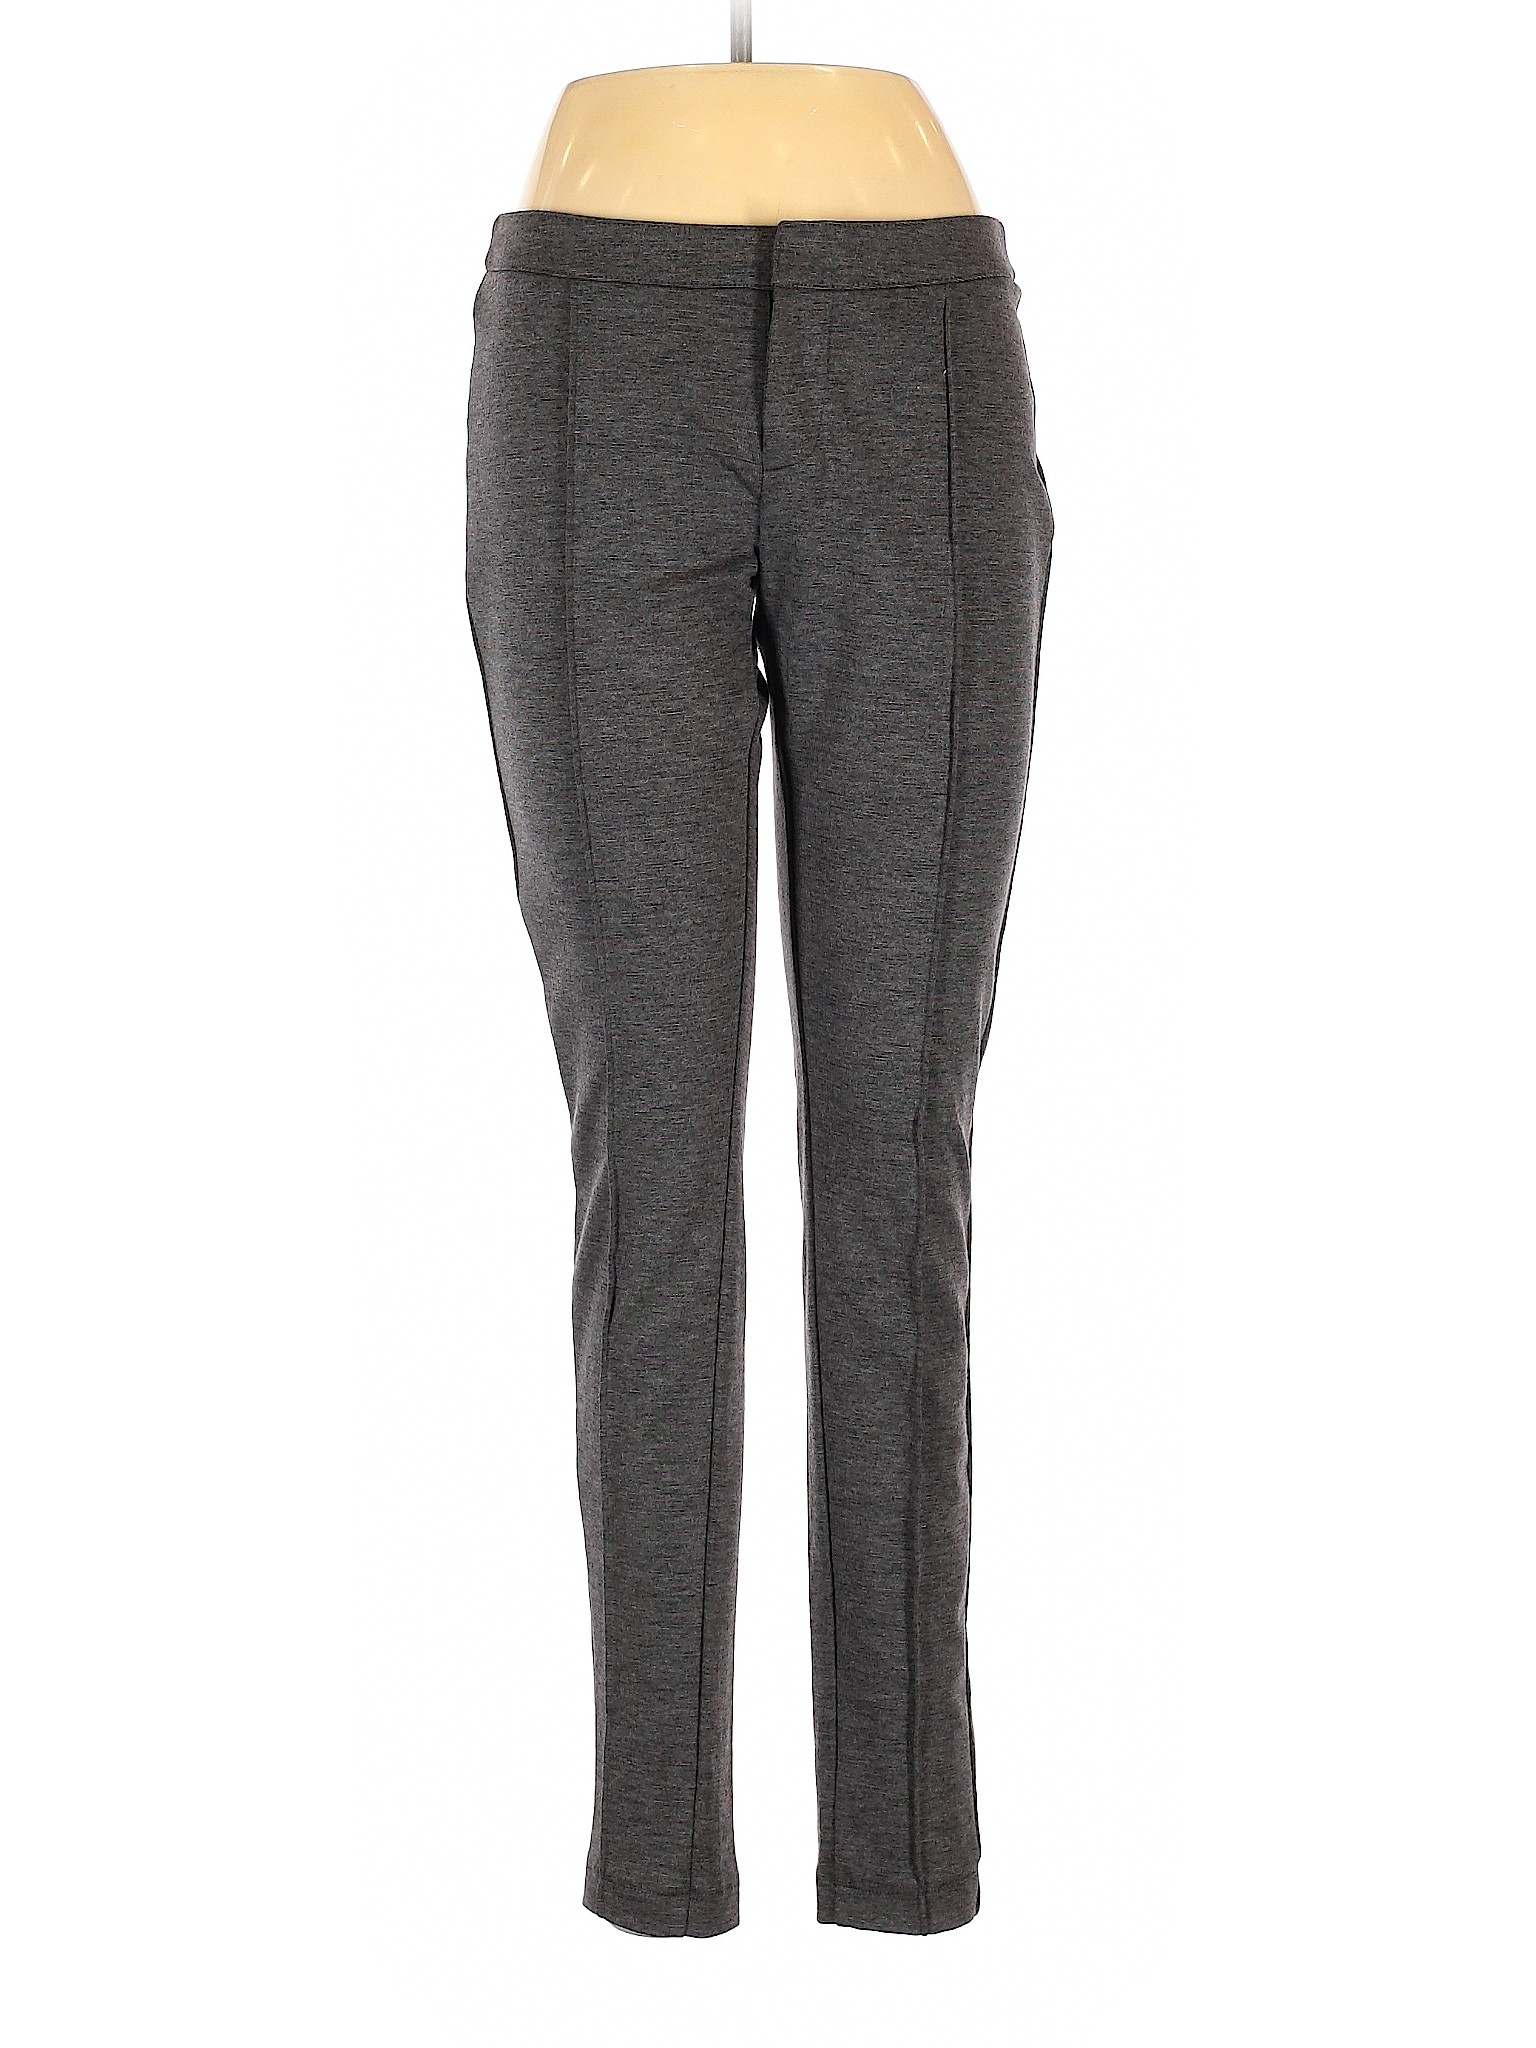 Merona Women Gray Dress Pants 6 | eBay